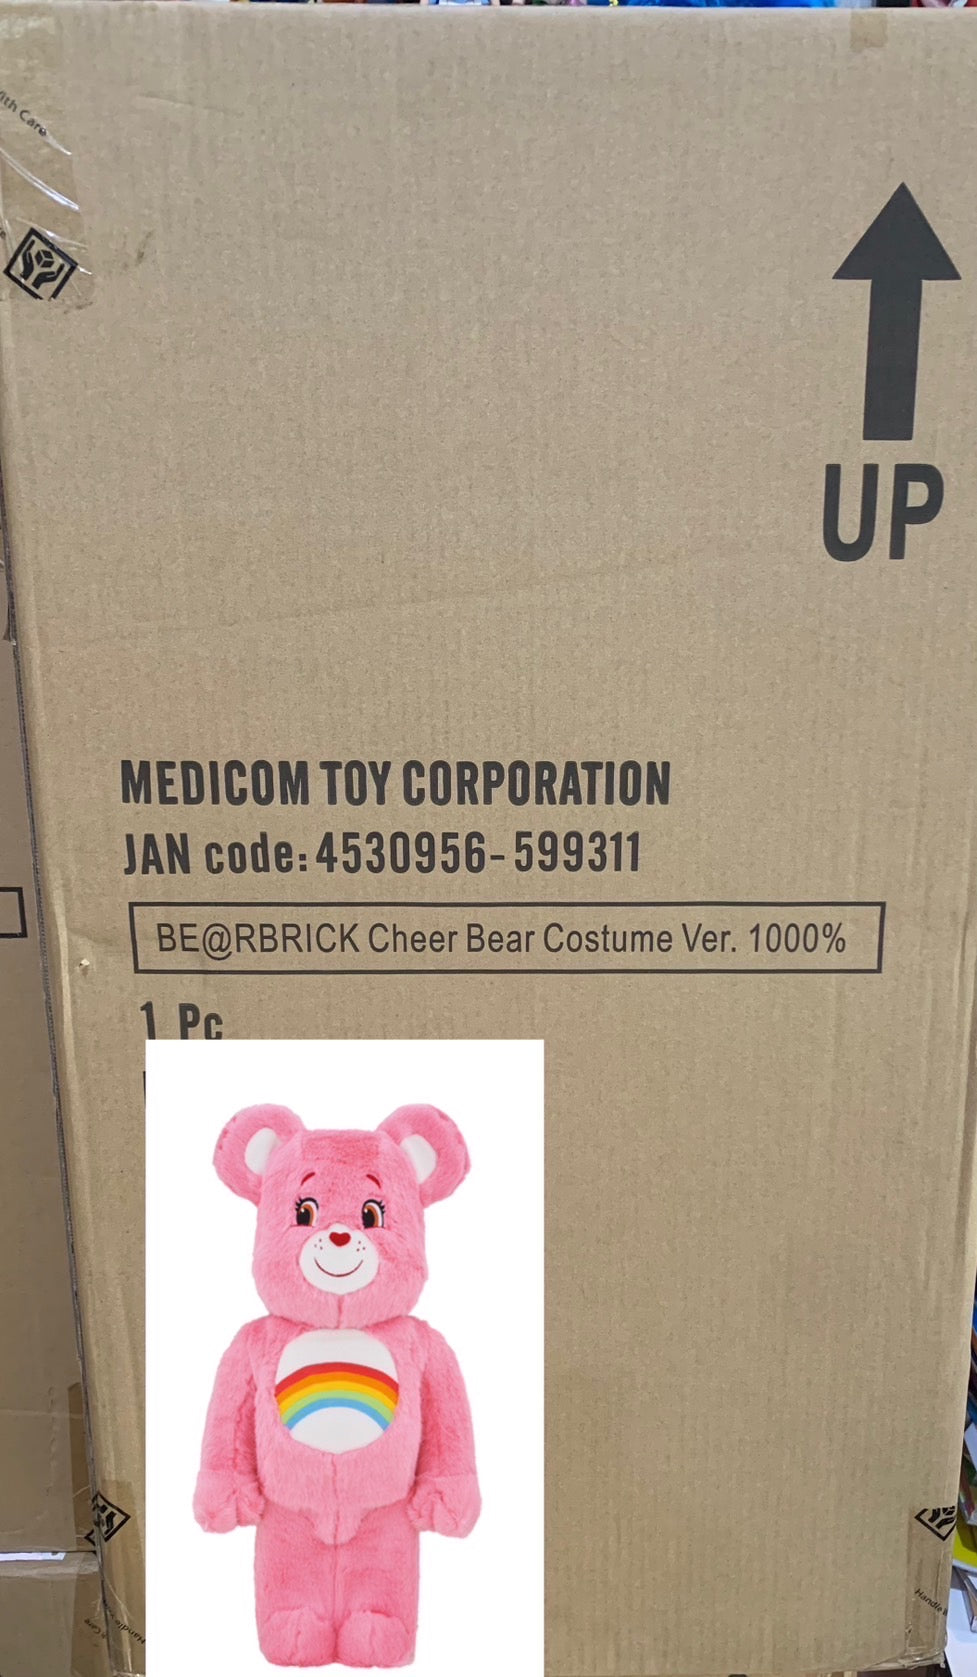 BE@RBRICK cheer bear costume ver.1000% wim-network.org